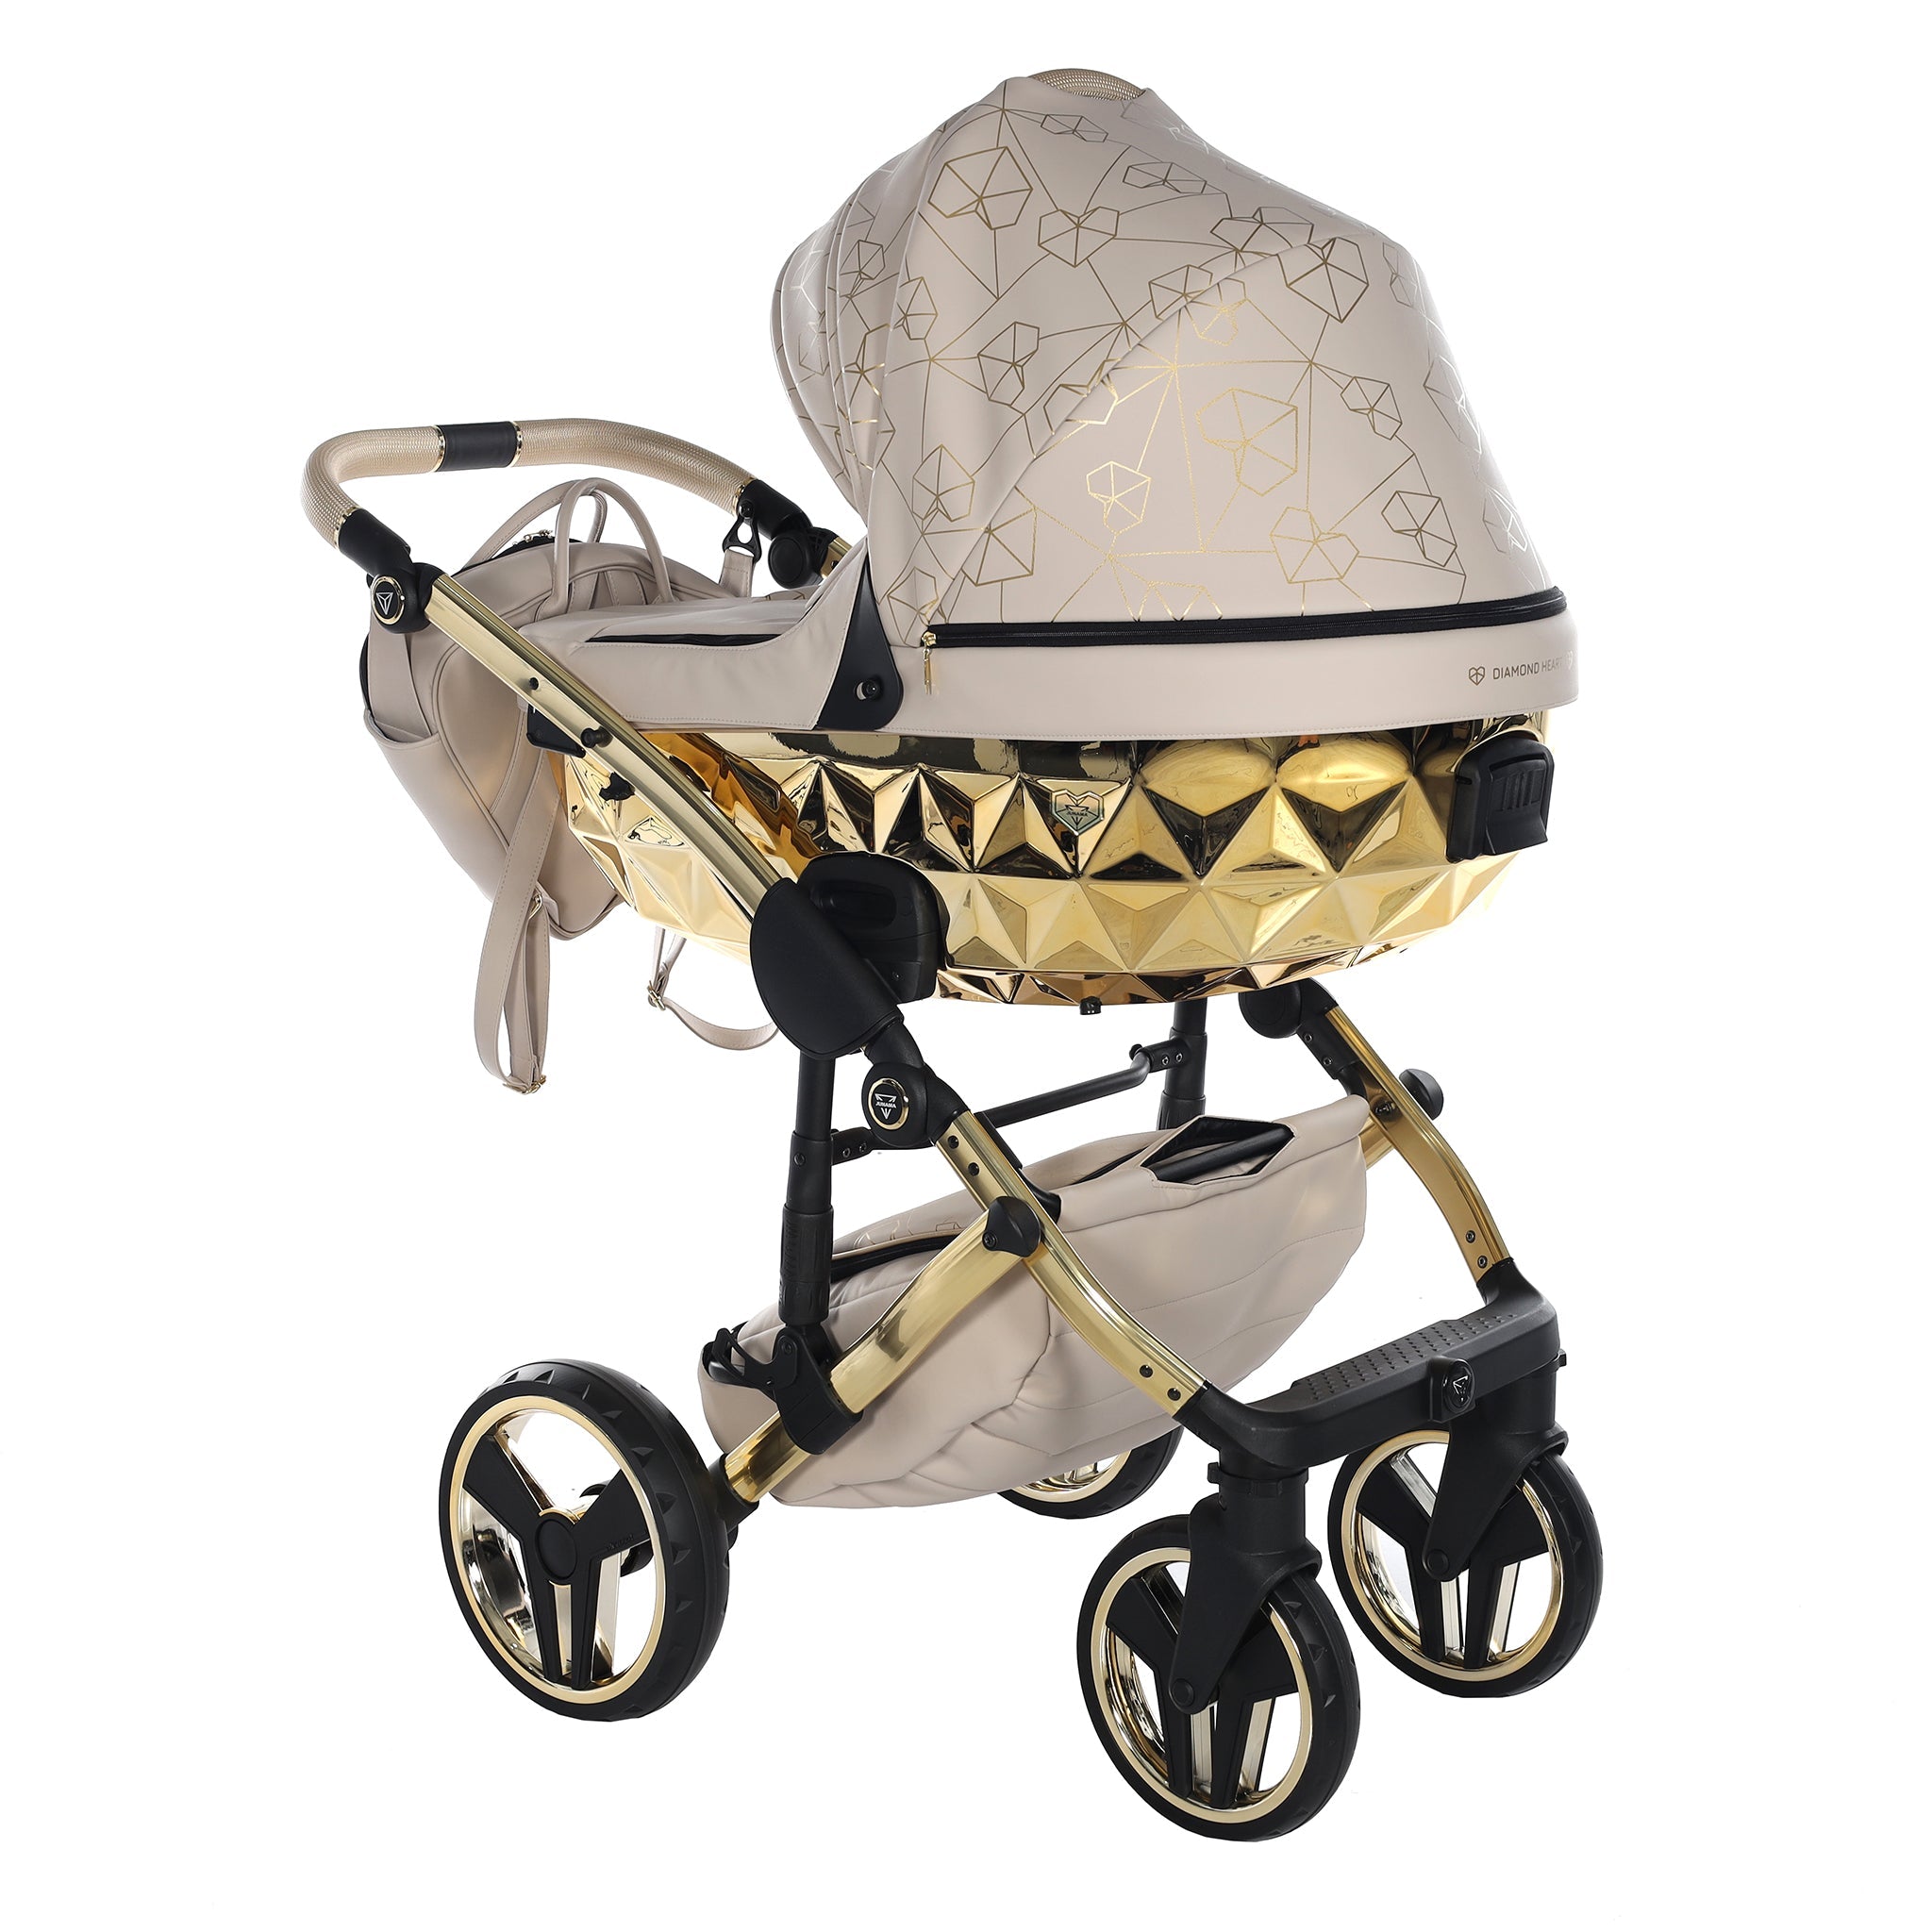 Junama Heart, baby prams or stroller 2 in 1 - Beige and Gold, Code number: JUNHERT07